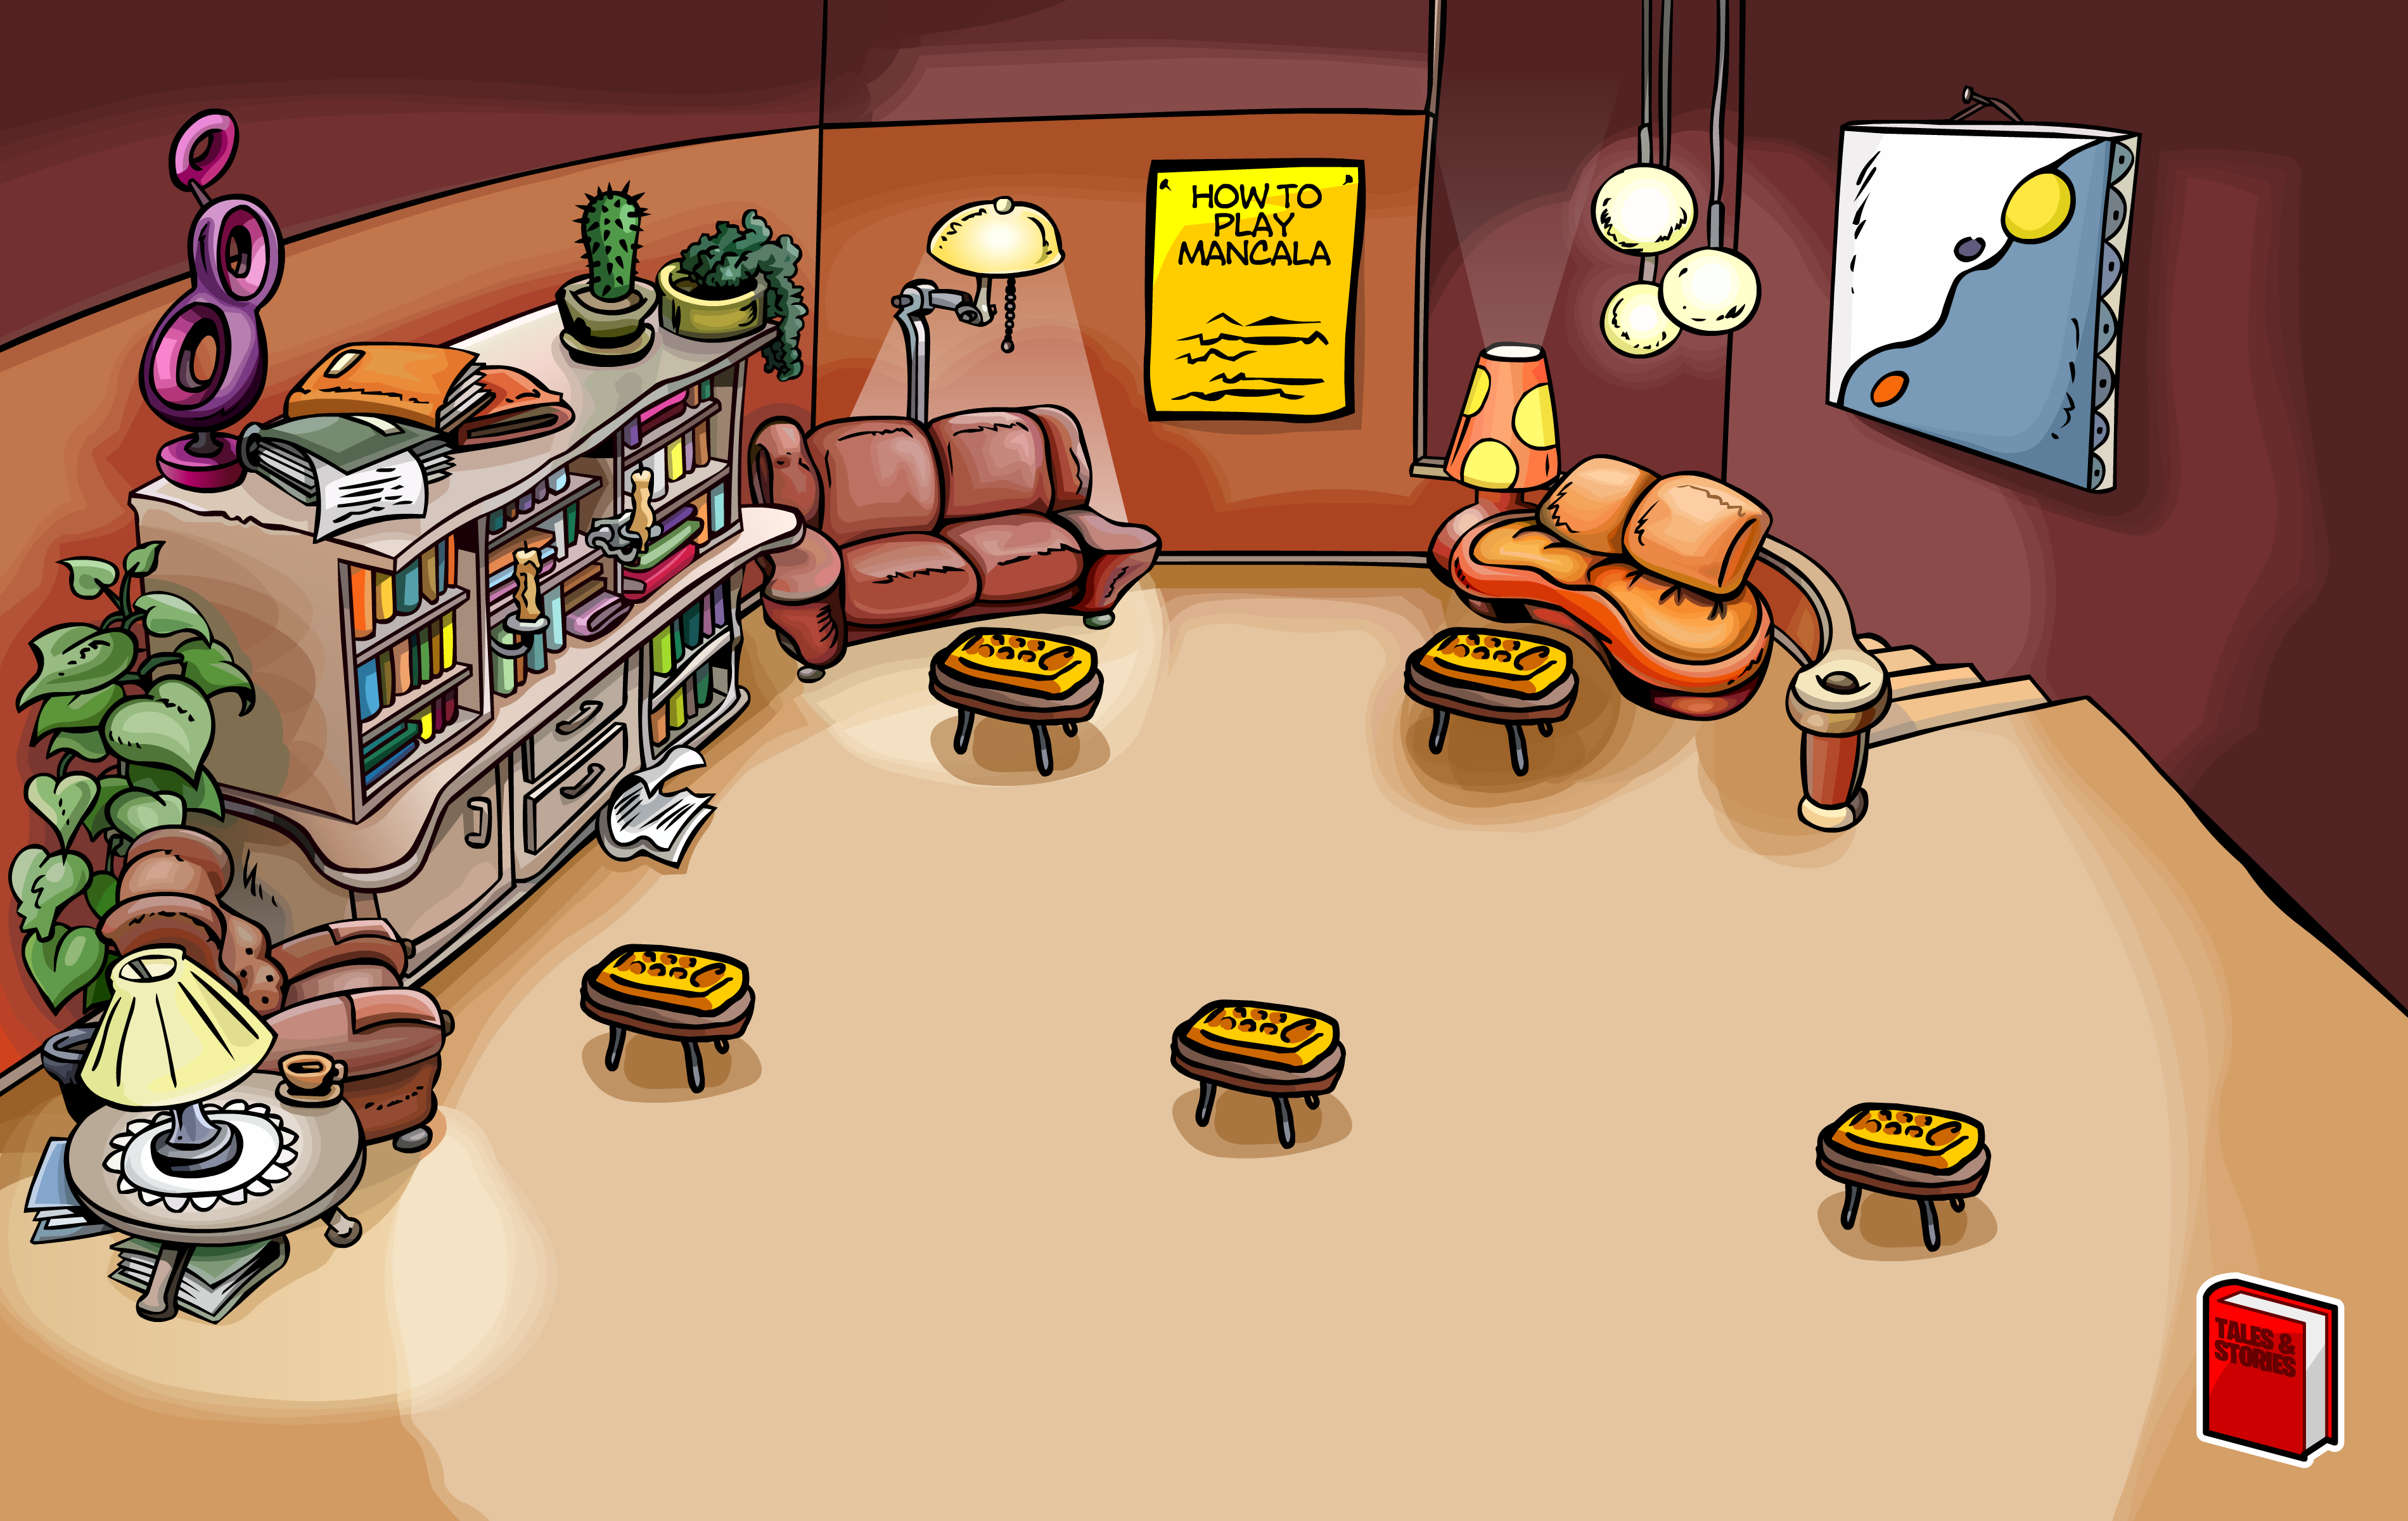 Book Room, Club Penguin Wiki